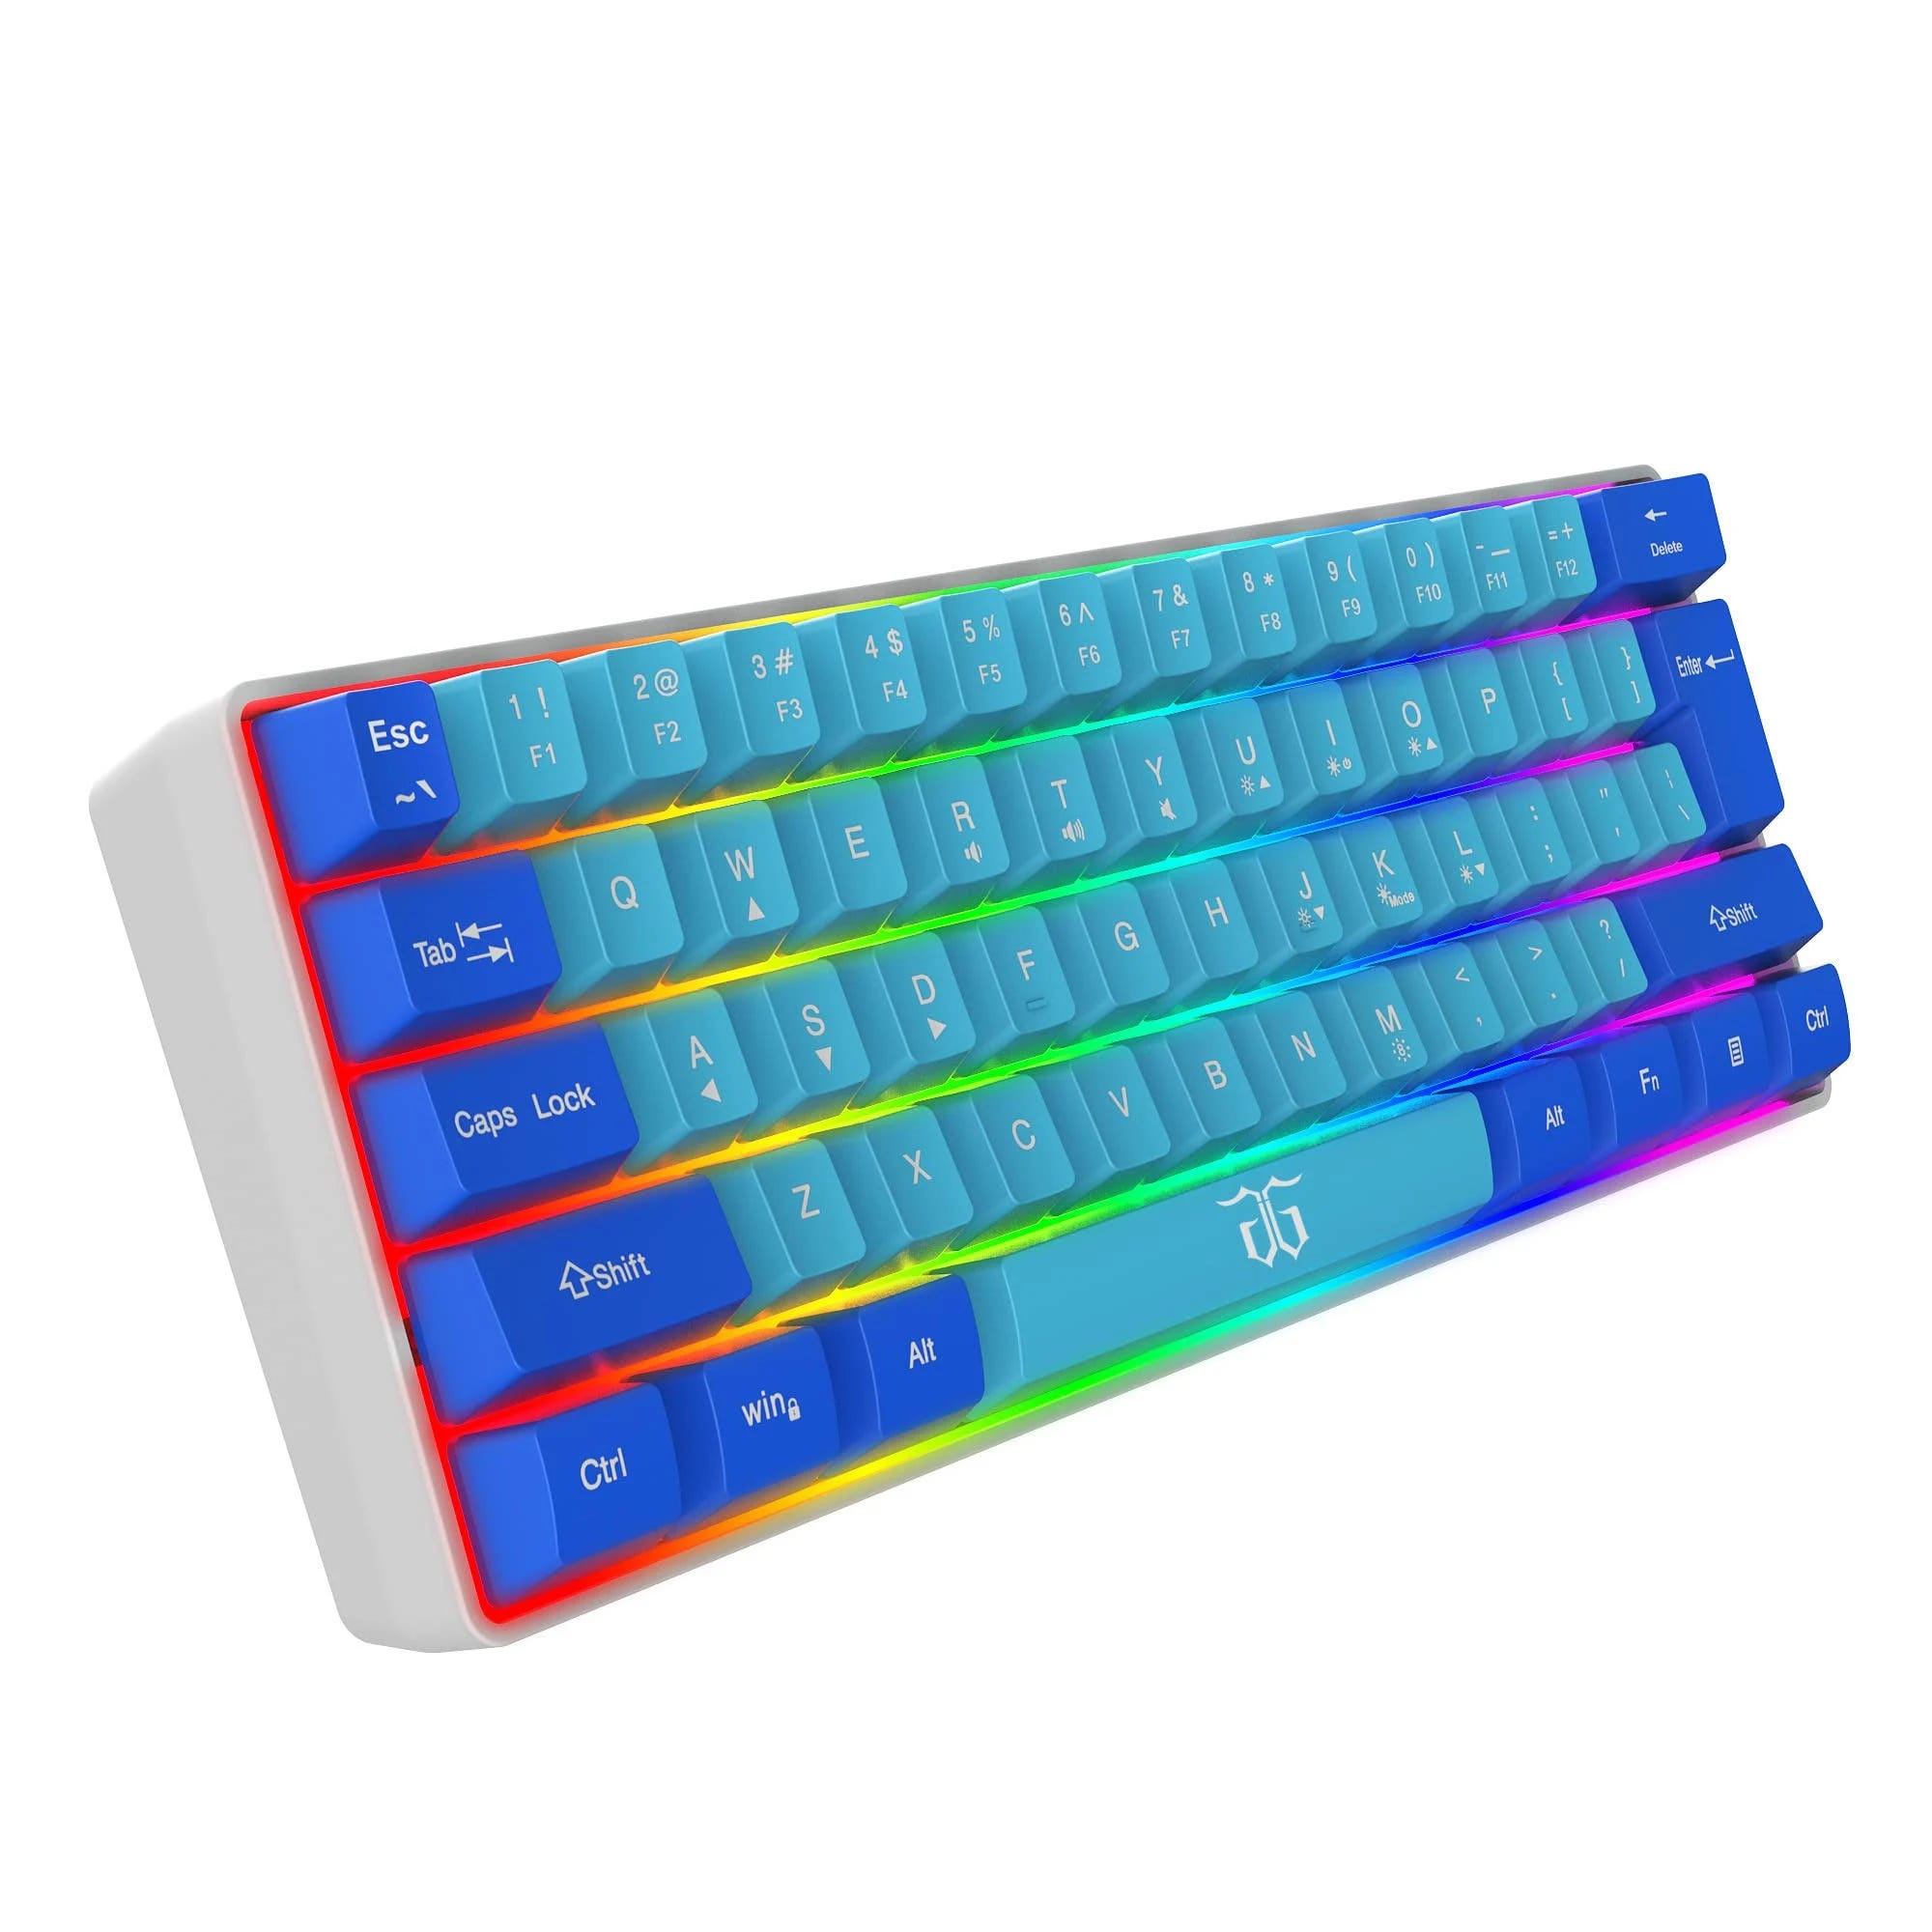 Stylish, Waterproof 60% Gaming Keyboard with RGB Backlighting | Image